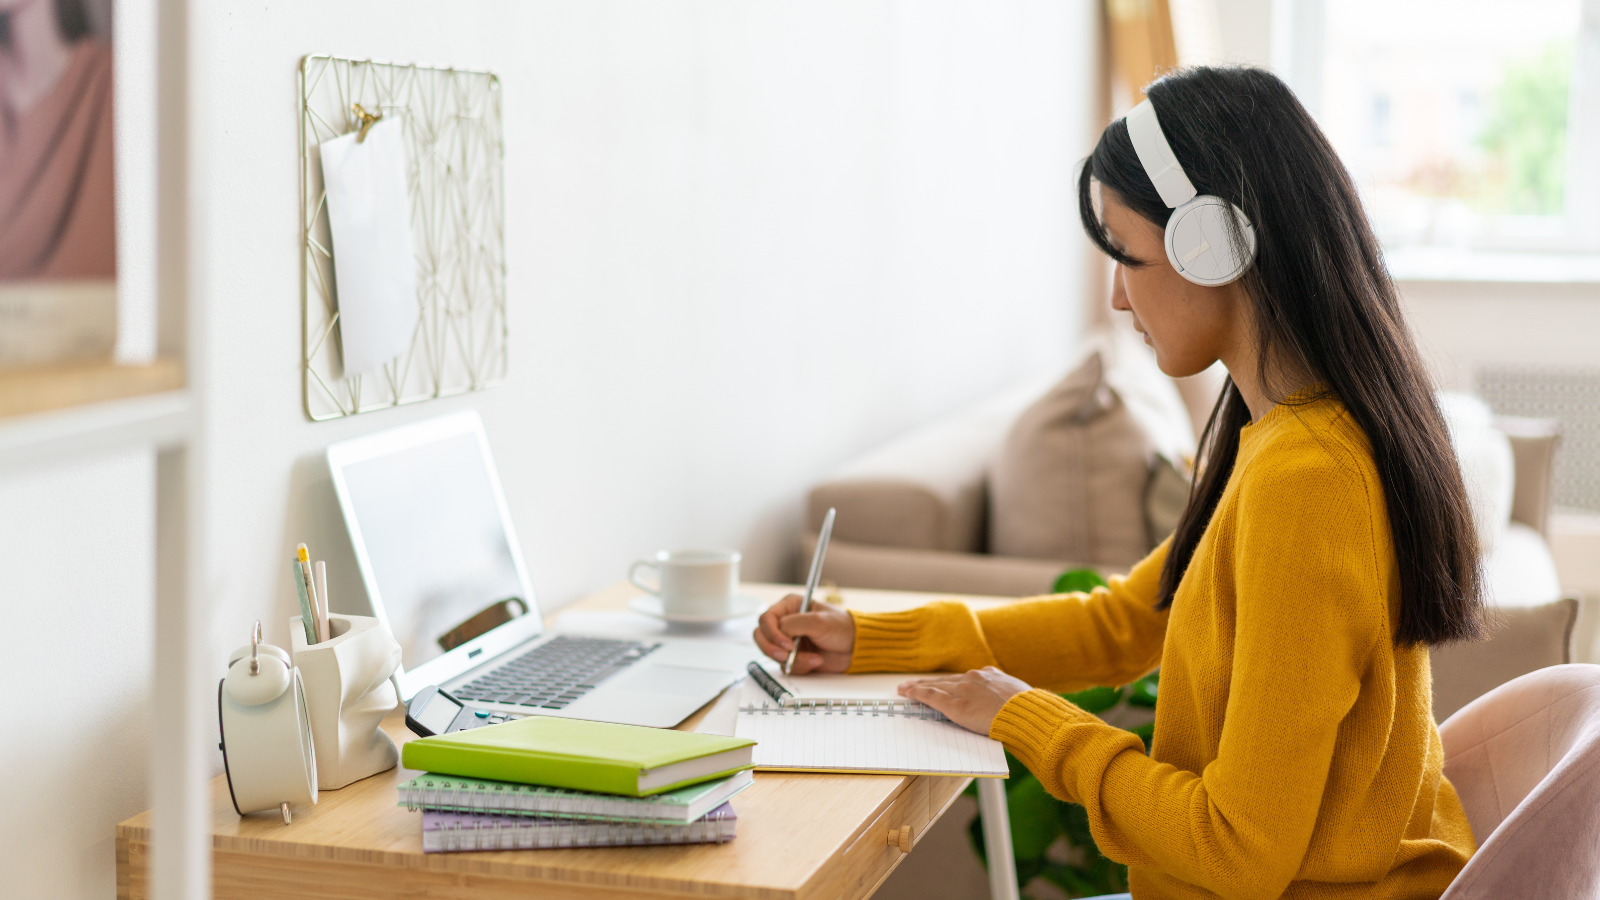 woman taking online course on laptop wearing headphones